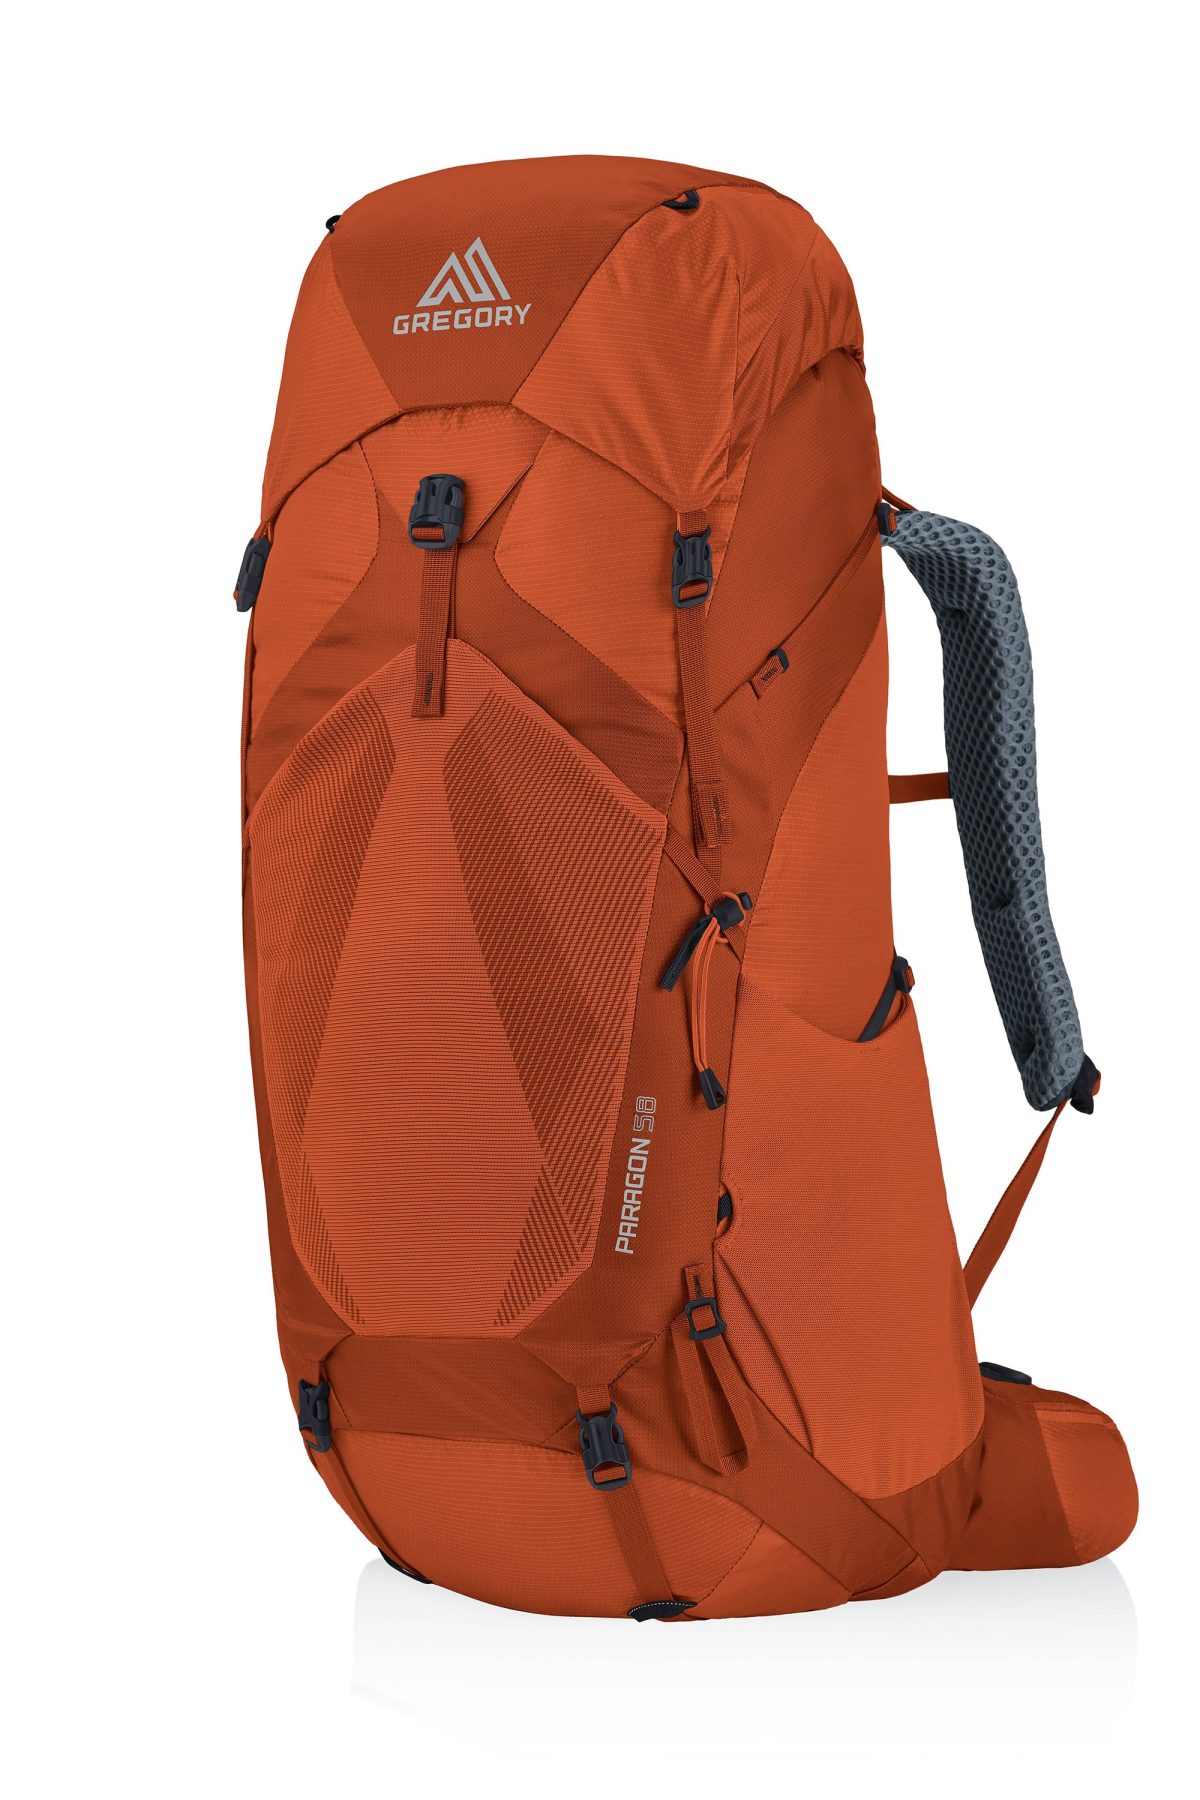 Gregory Paragon 58 Backpack - Ferrous Orange - S/M